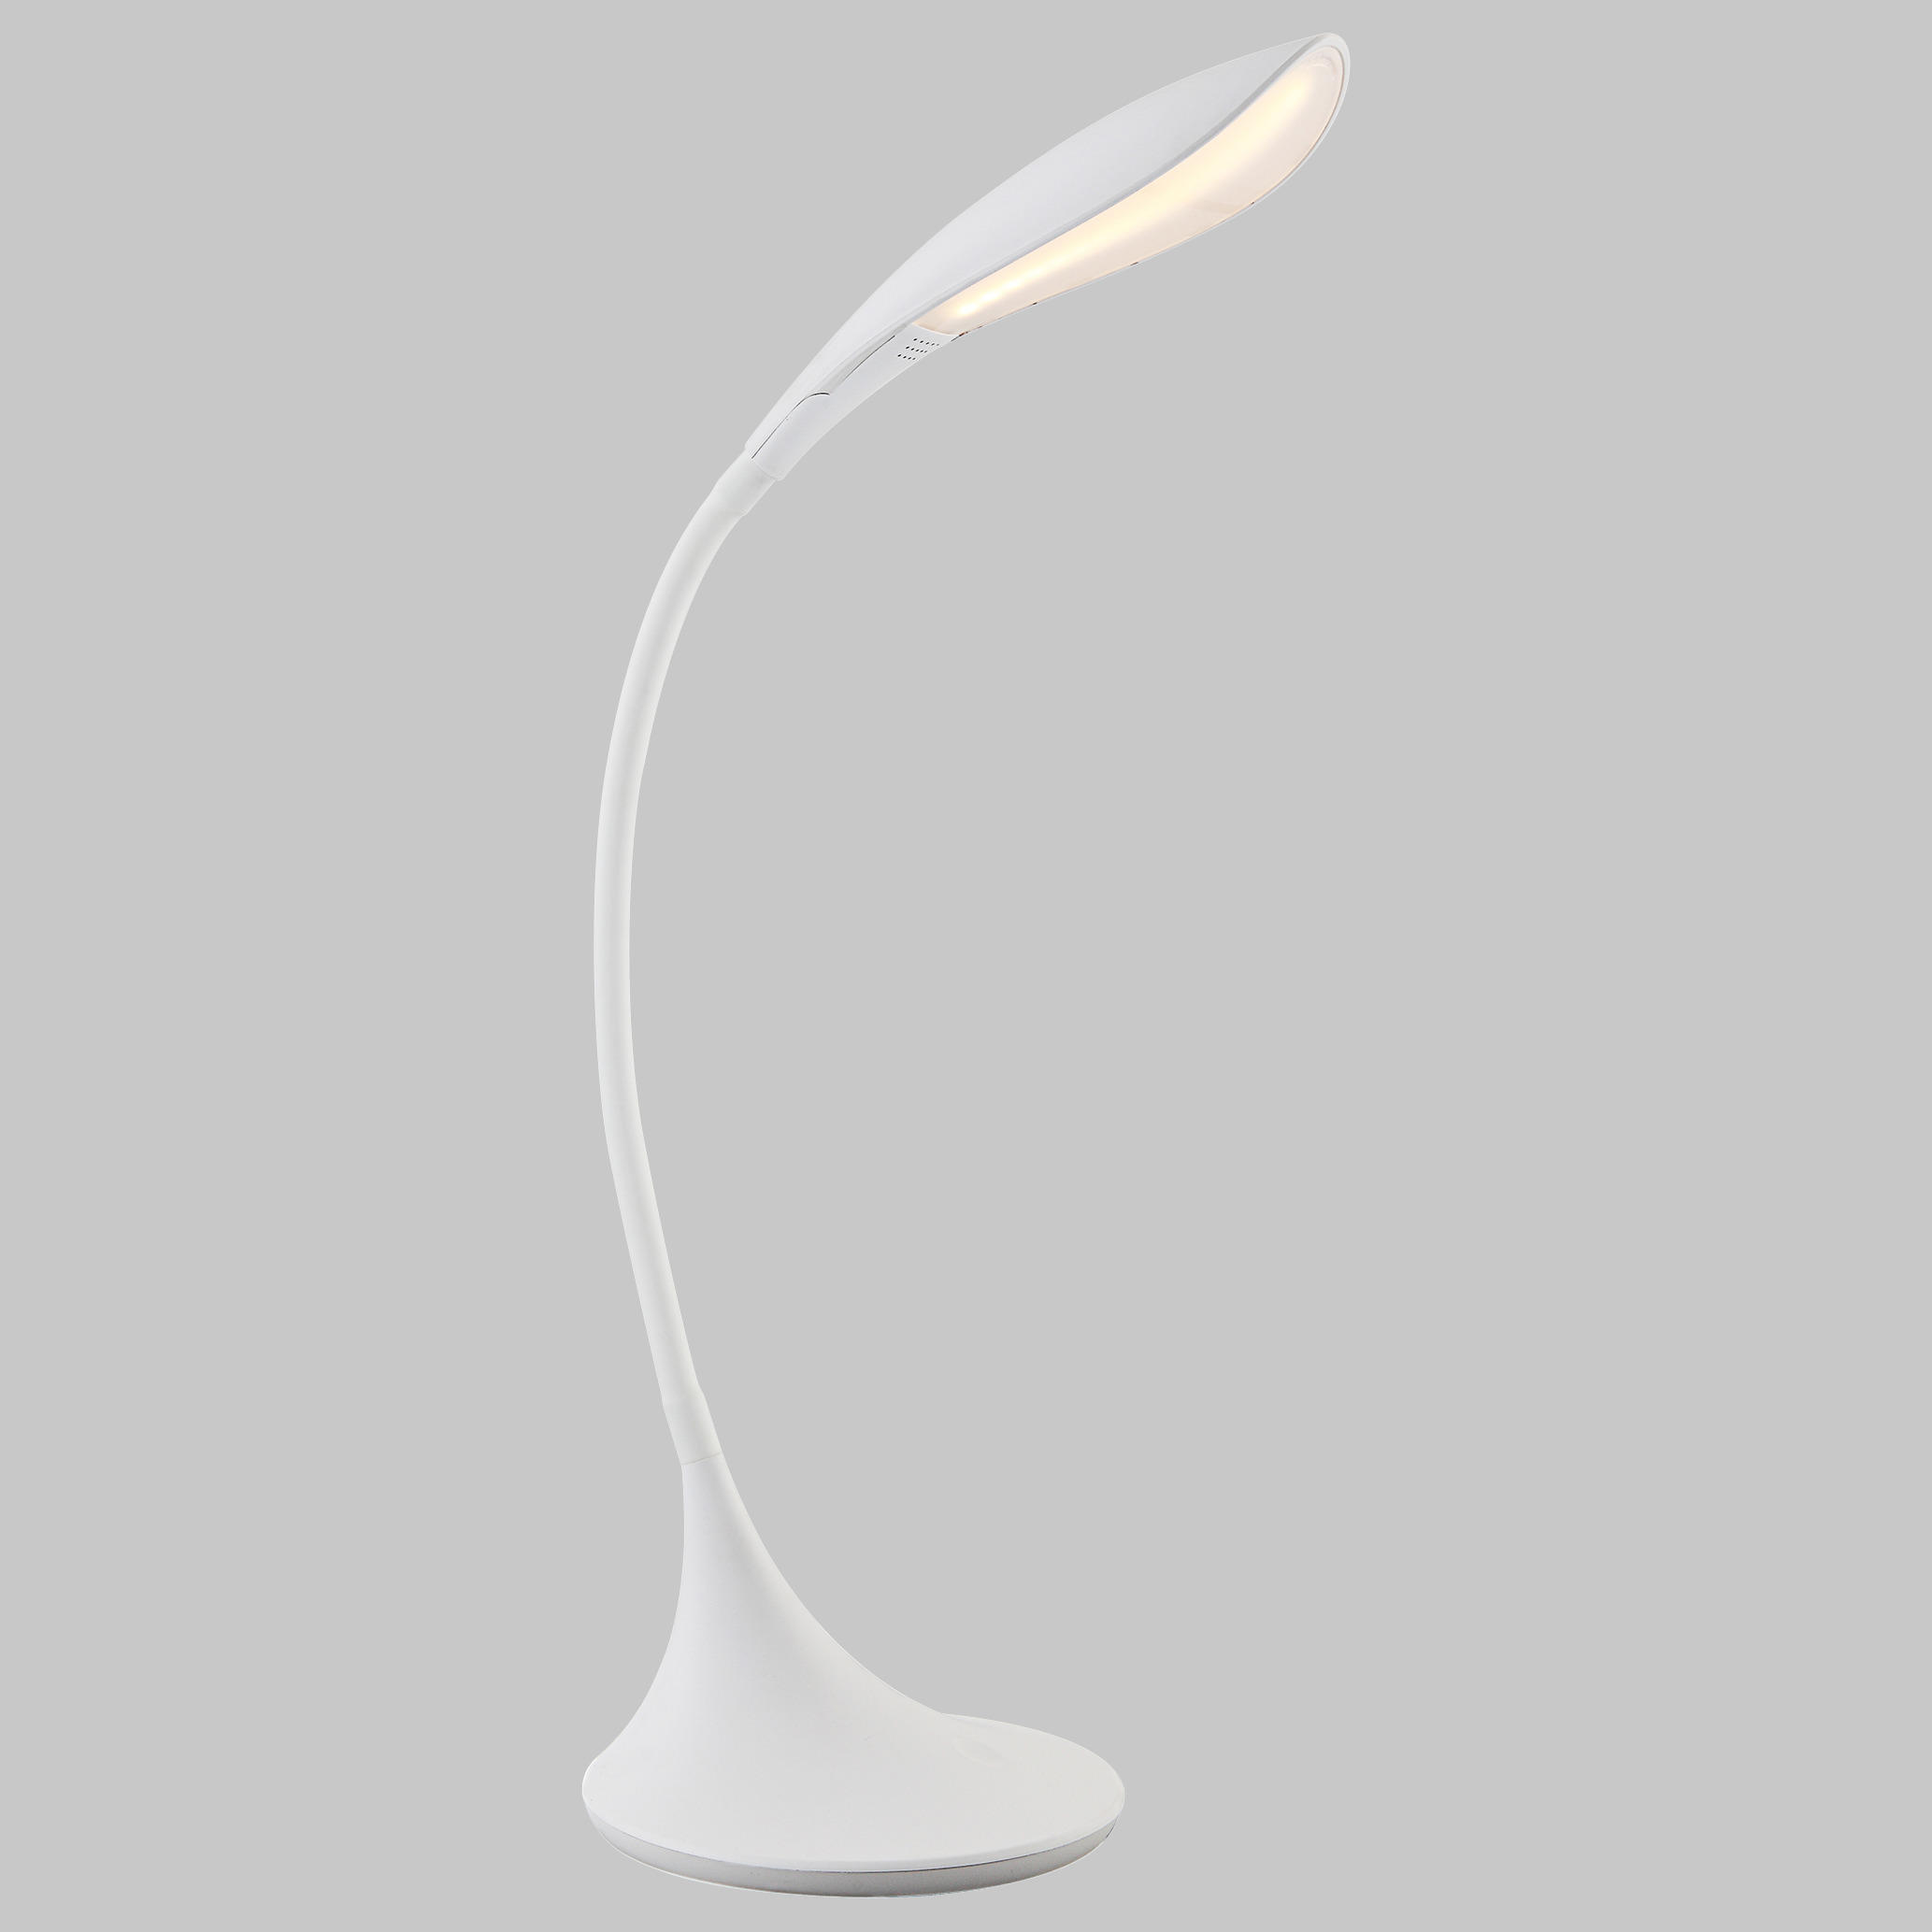 LED-TISCHLEUCHTE 51/67 cm   - Weiß, MODERN, Kunststoff/Metall (51/67cm) - Globo